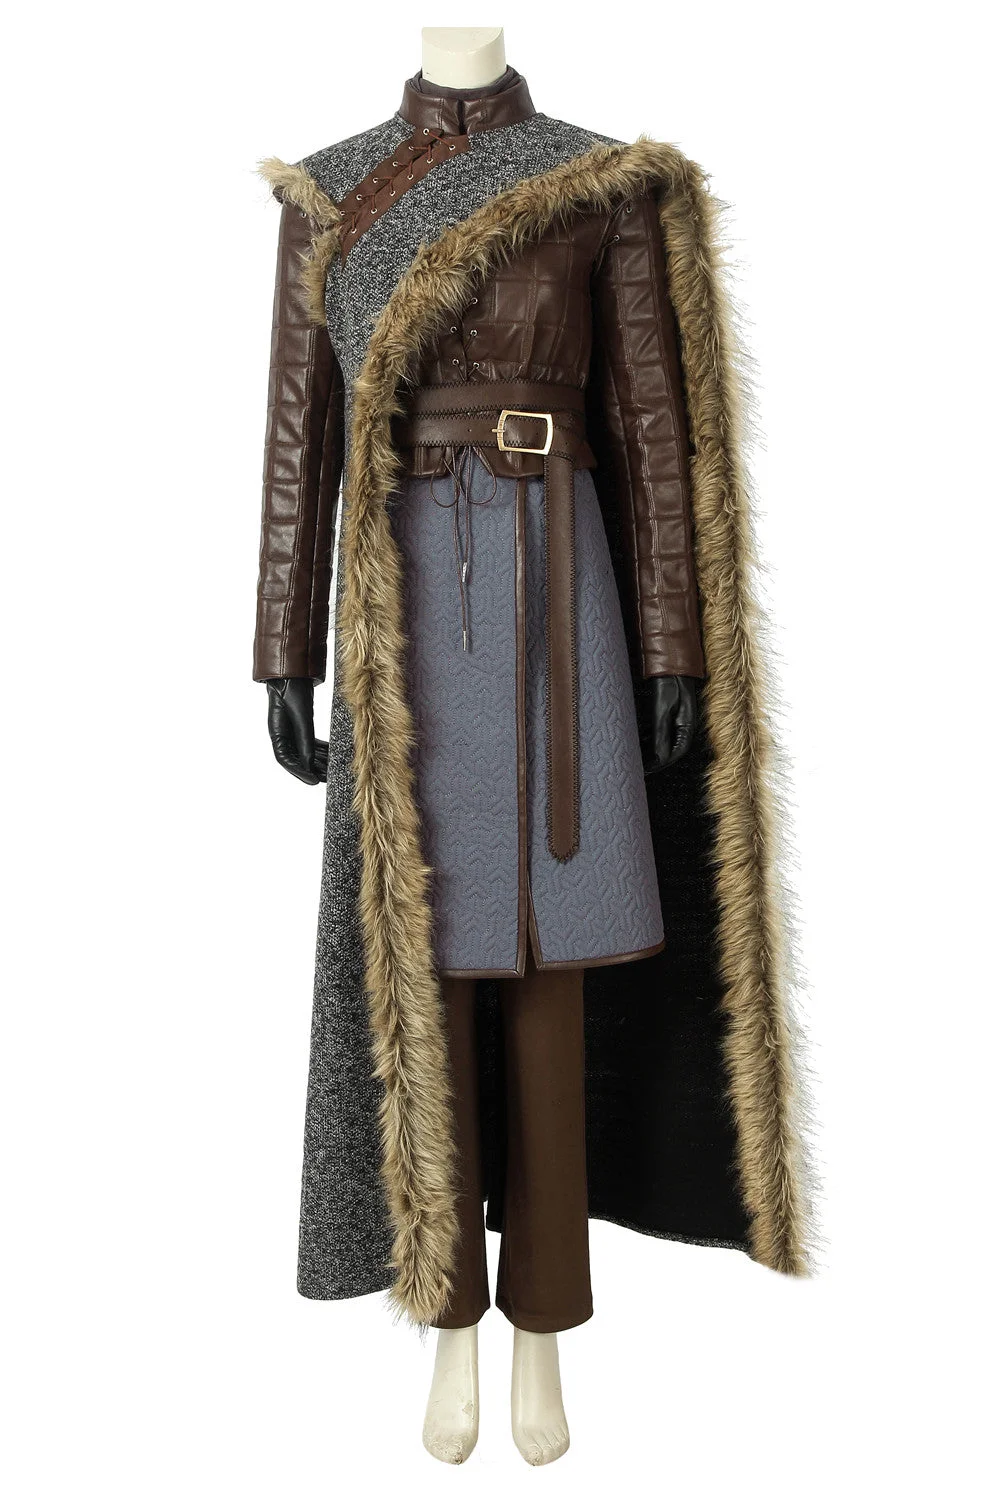 Arya Stark Costume Game of Thrones 8 Cosplay Suits